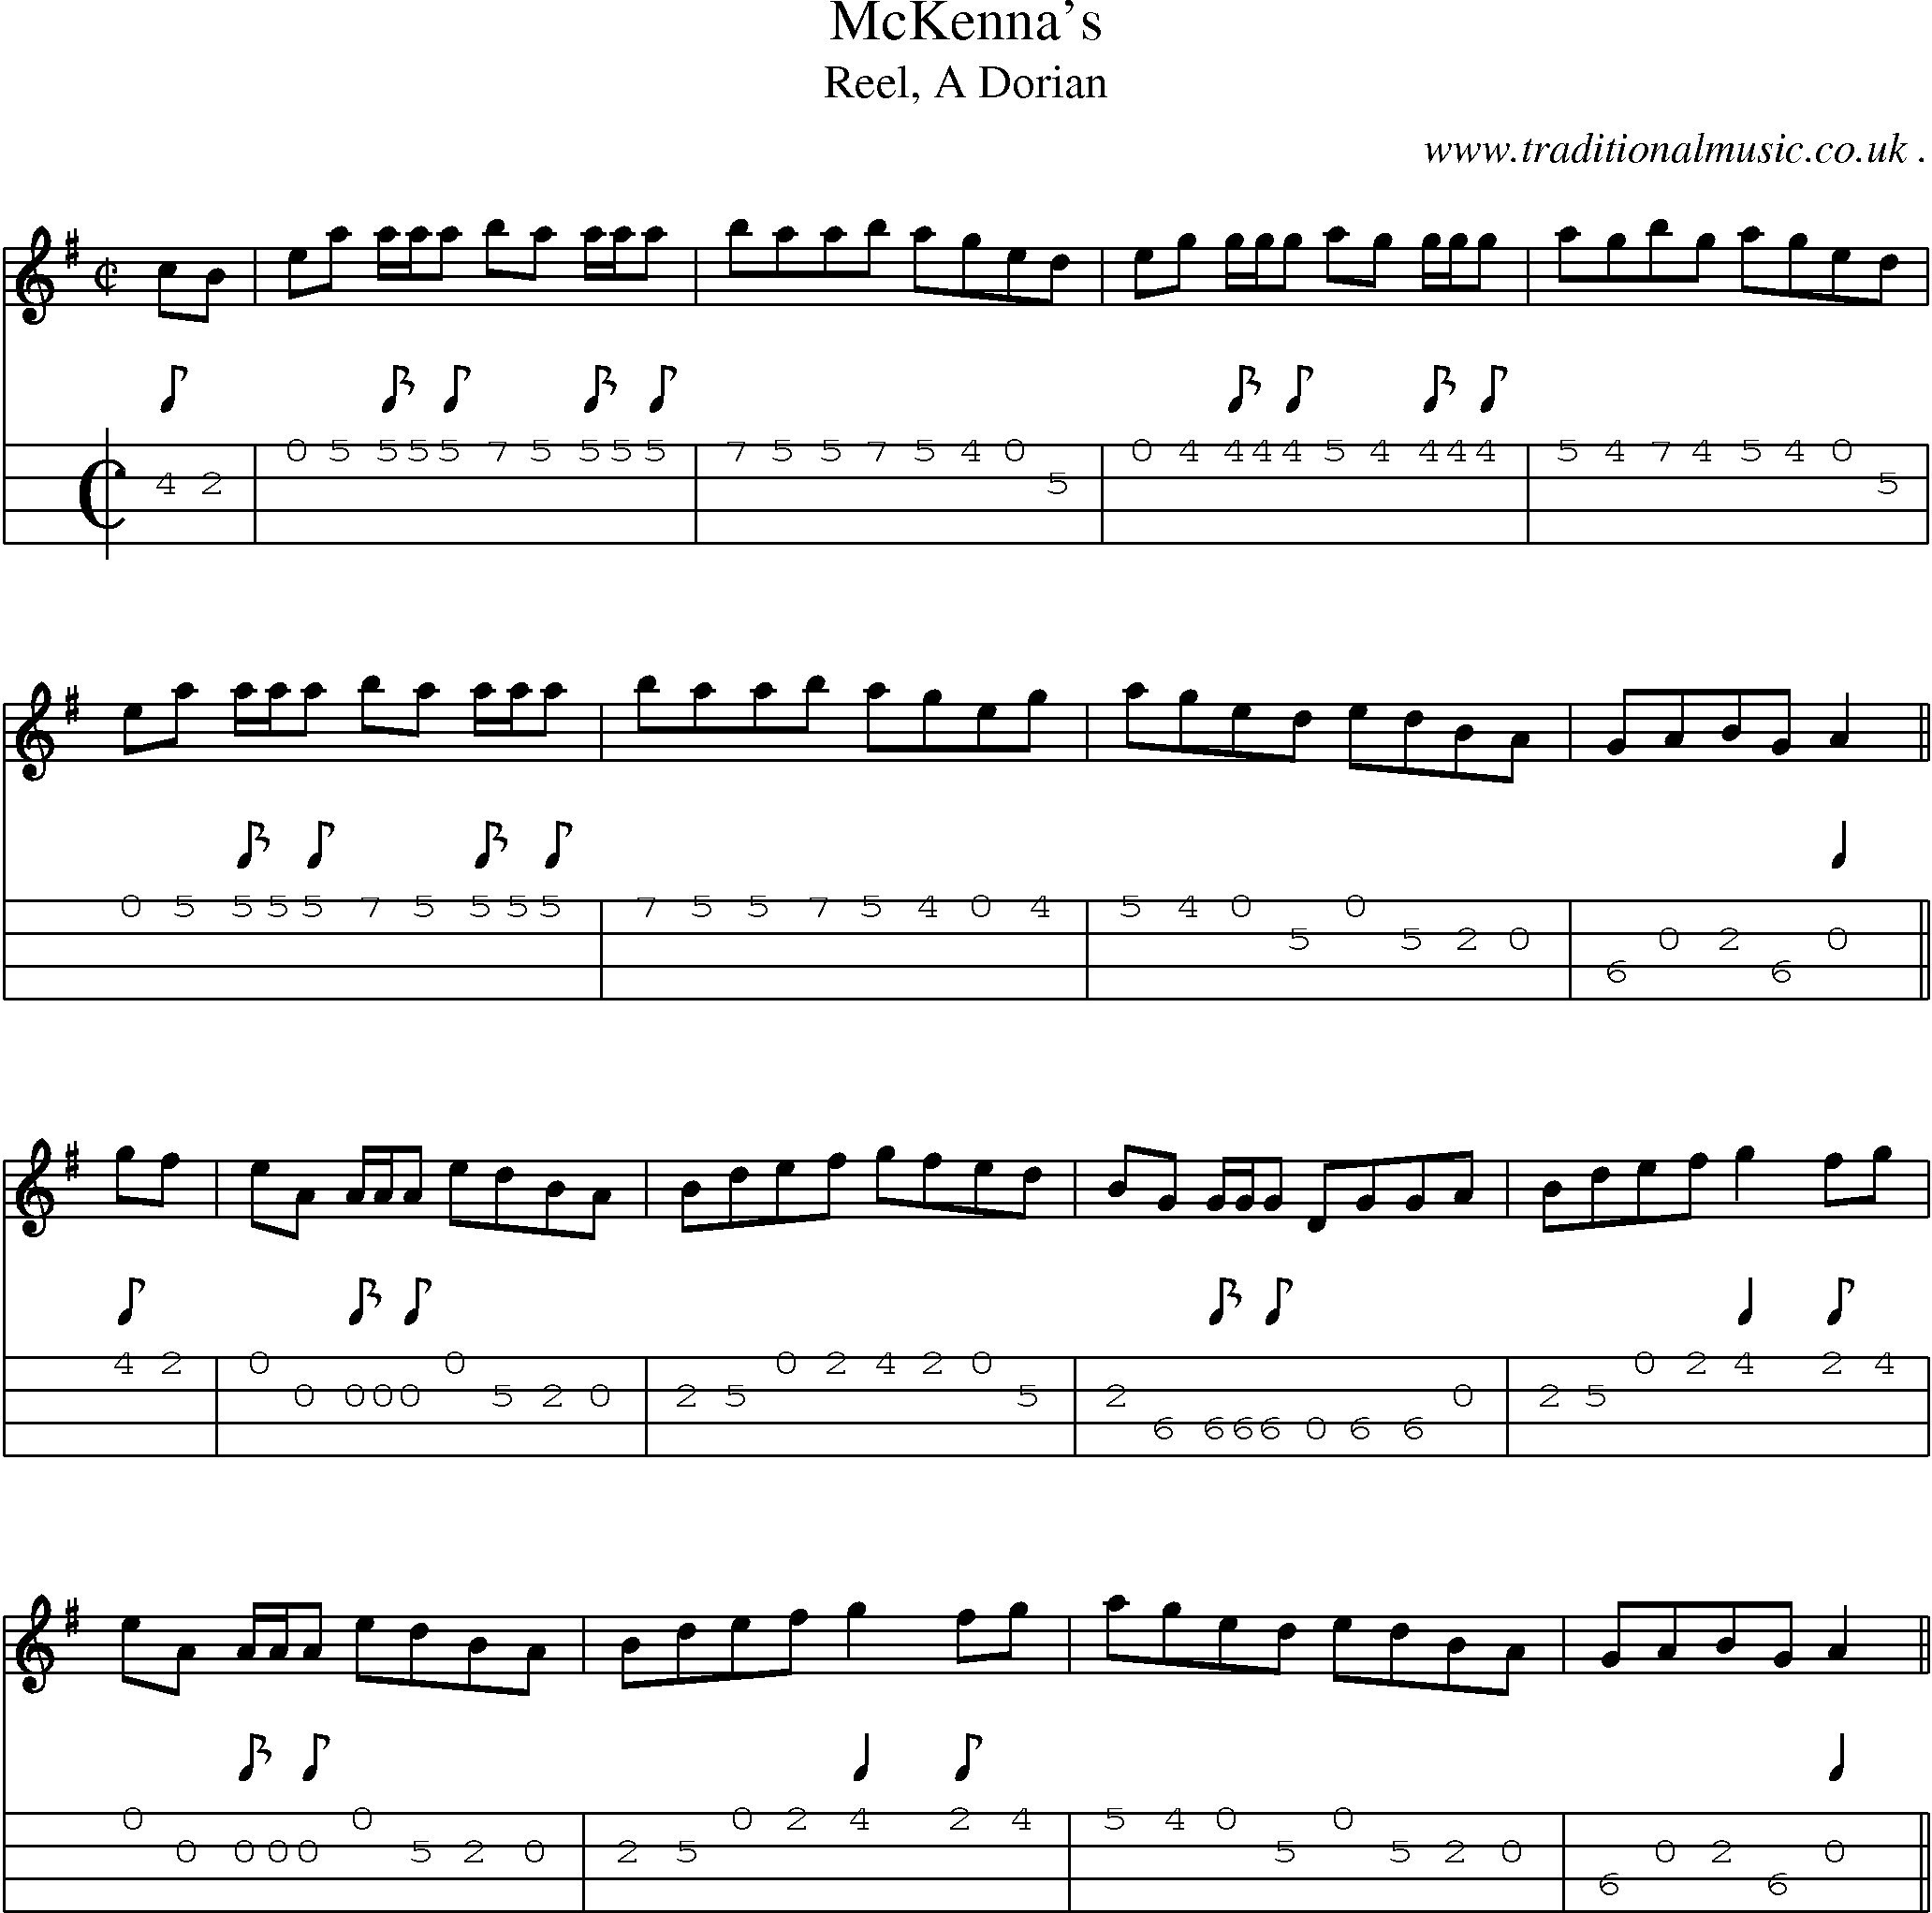 Sheet-music  score, Chords and Mandolin Tabs for Mckennas